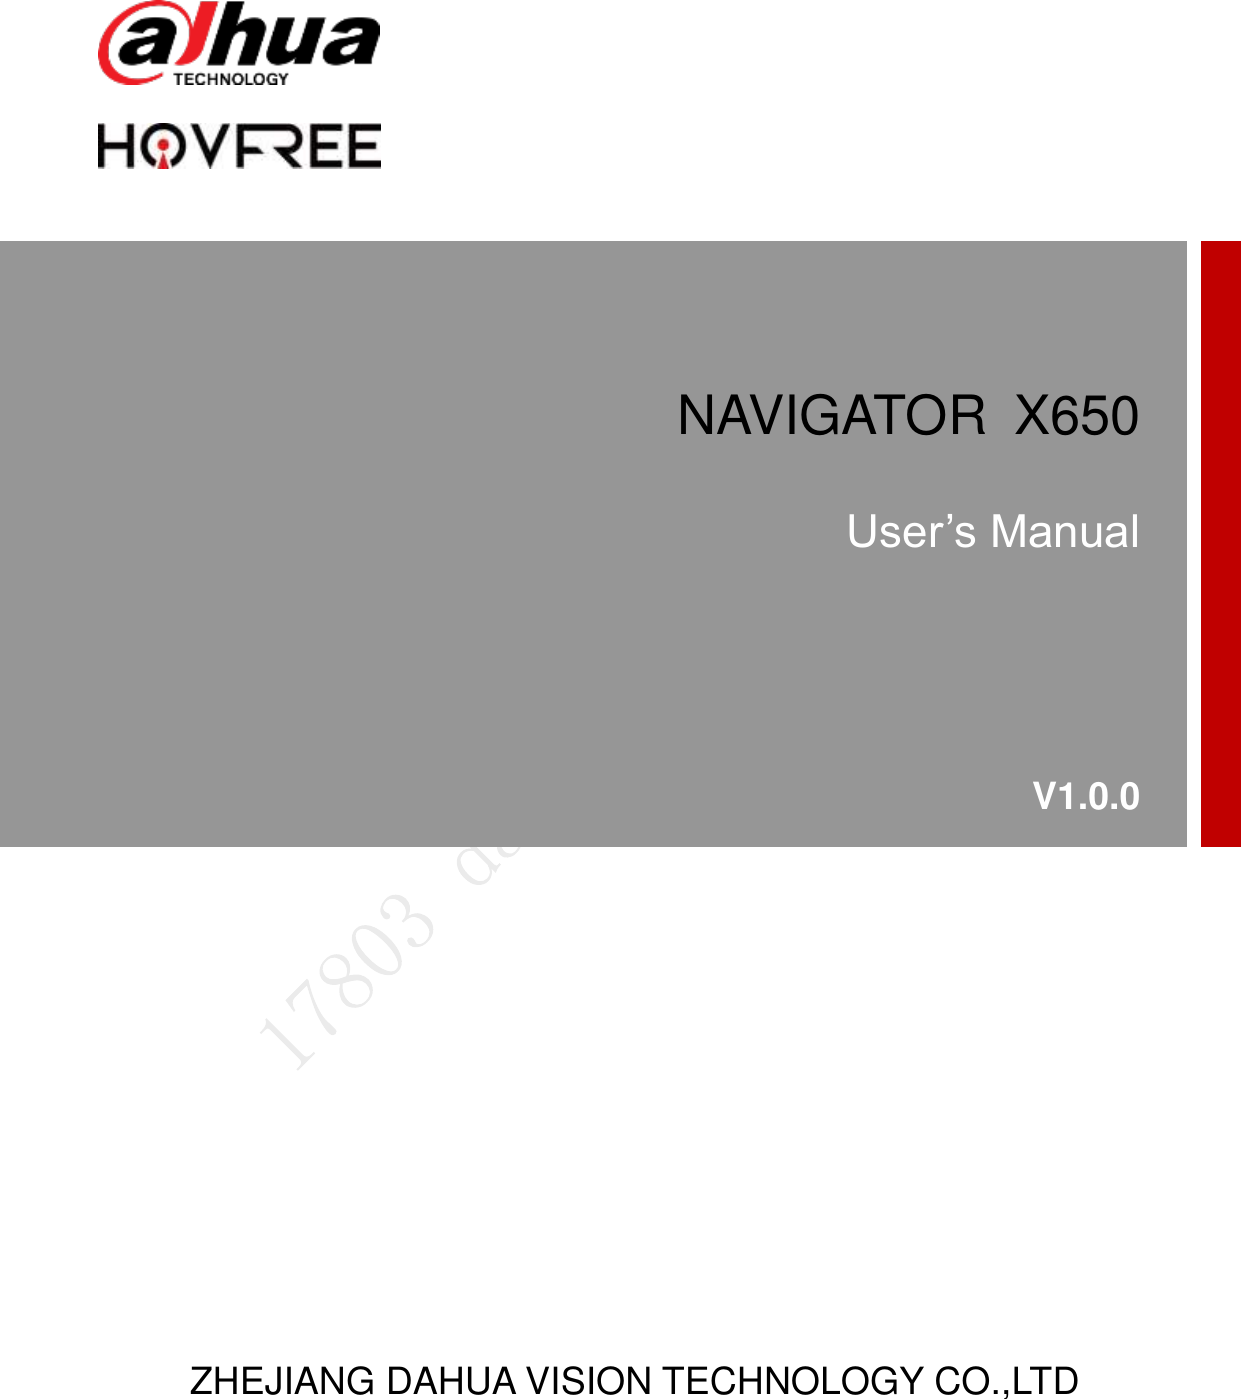         NAVIGATOR  X650 User’s Manual V1.0.0 ZHEJIANG DAHUA VISION TECHNOLOGY CO.,LTD  